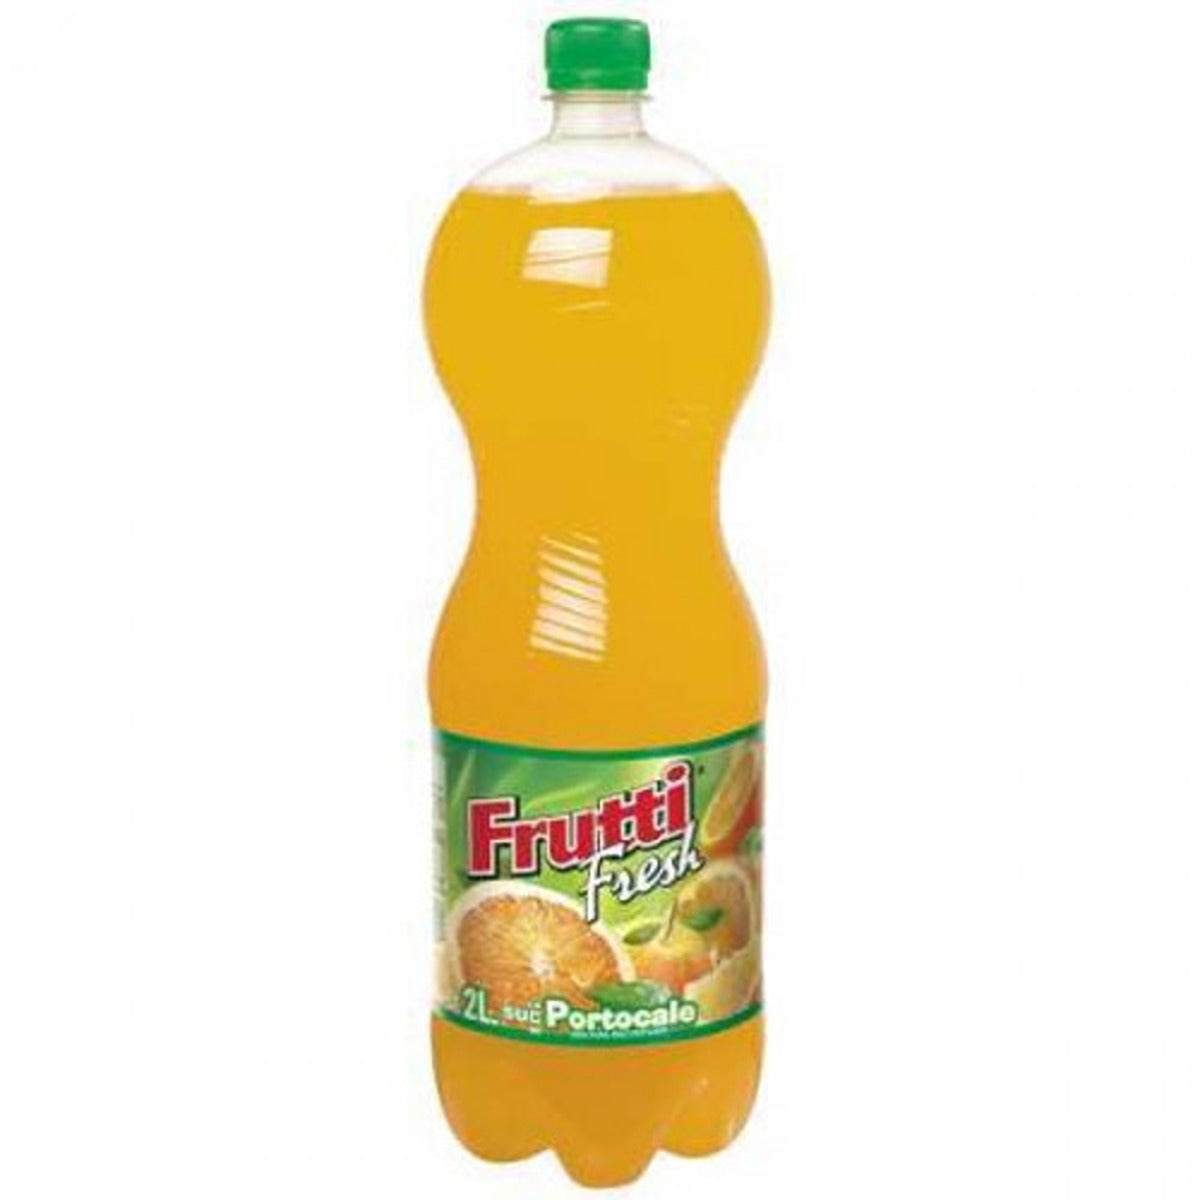 A bottle of Frutti Fresh - Orange Flavour Drink - 2L on a white background.